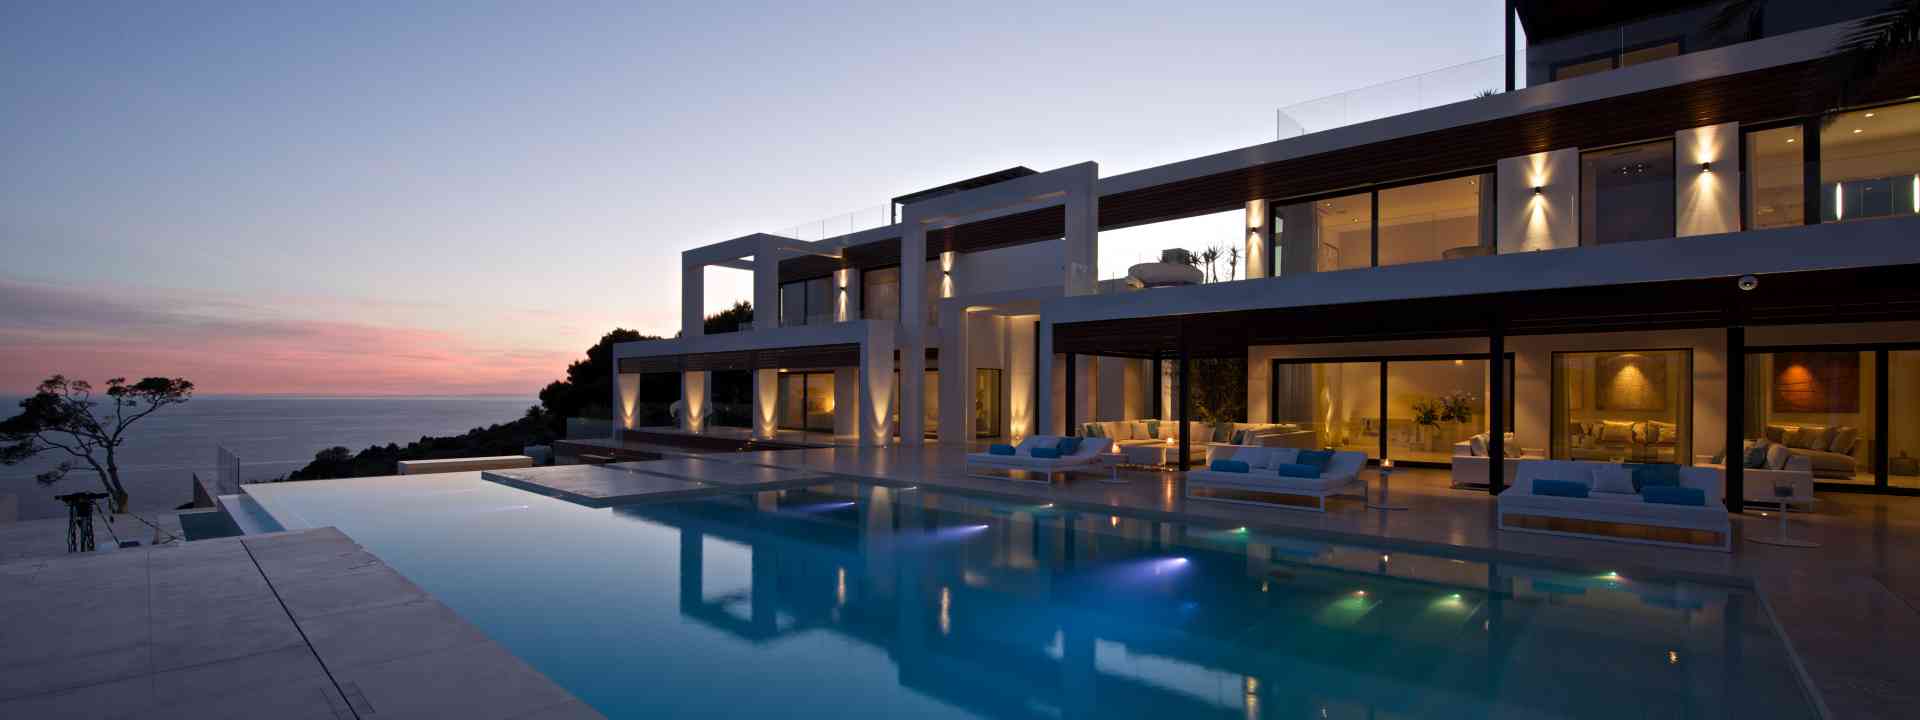 Luxury-outstanding-holiday-villa-Andratx-in-Mallorca 